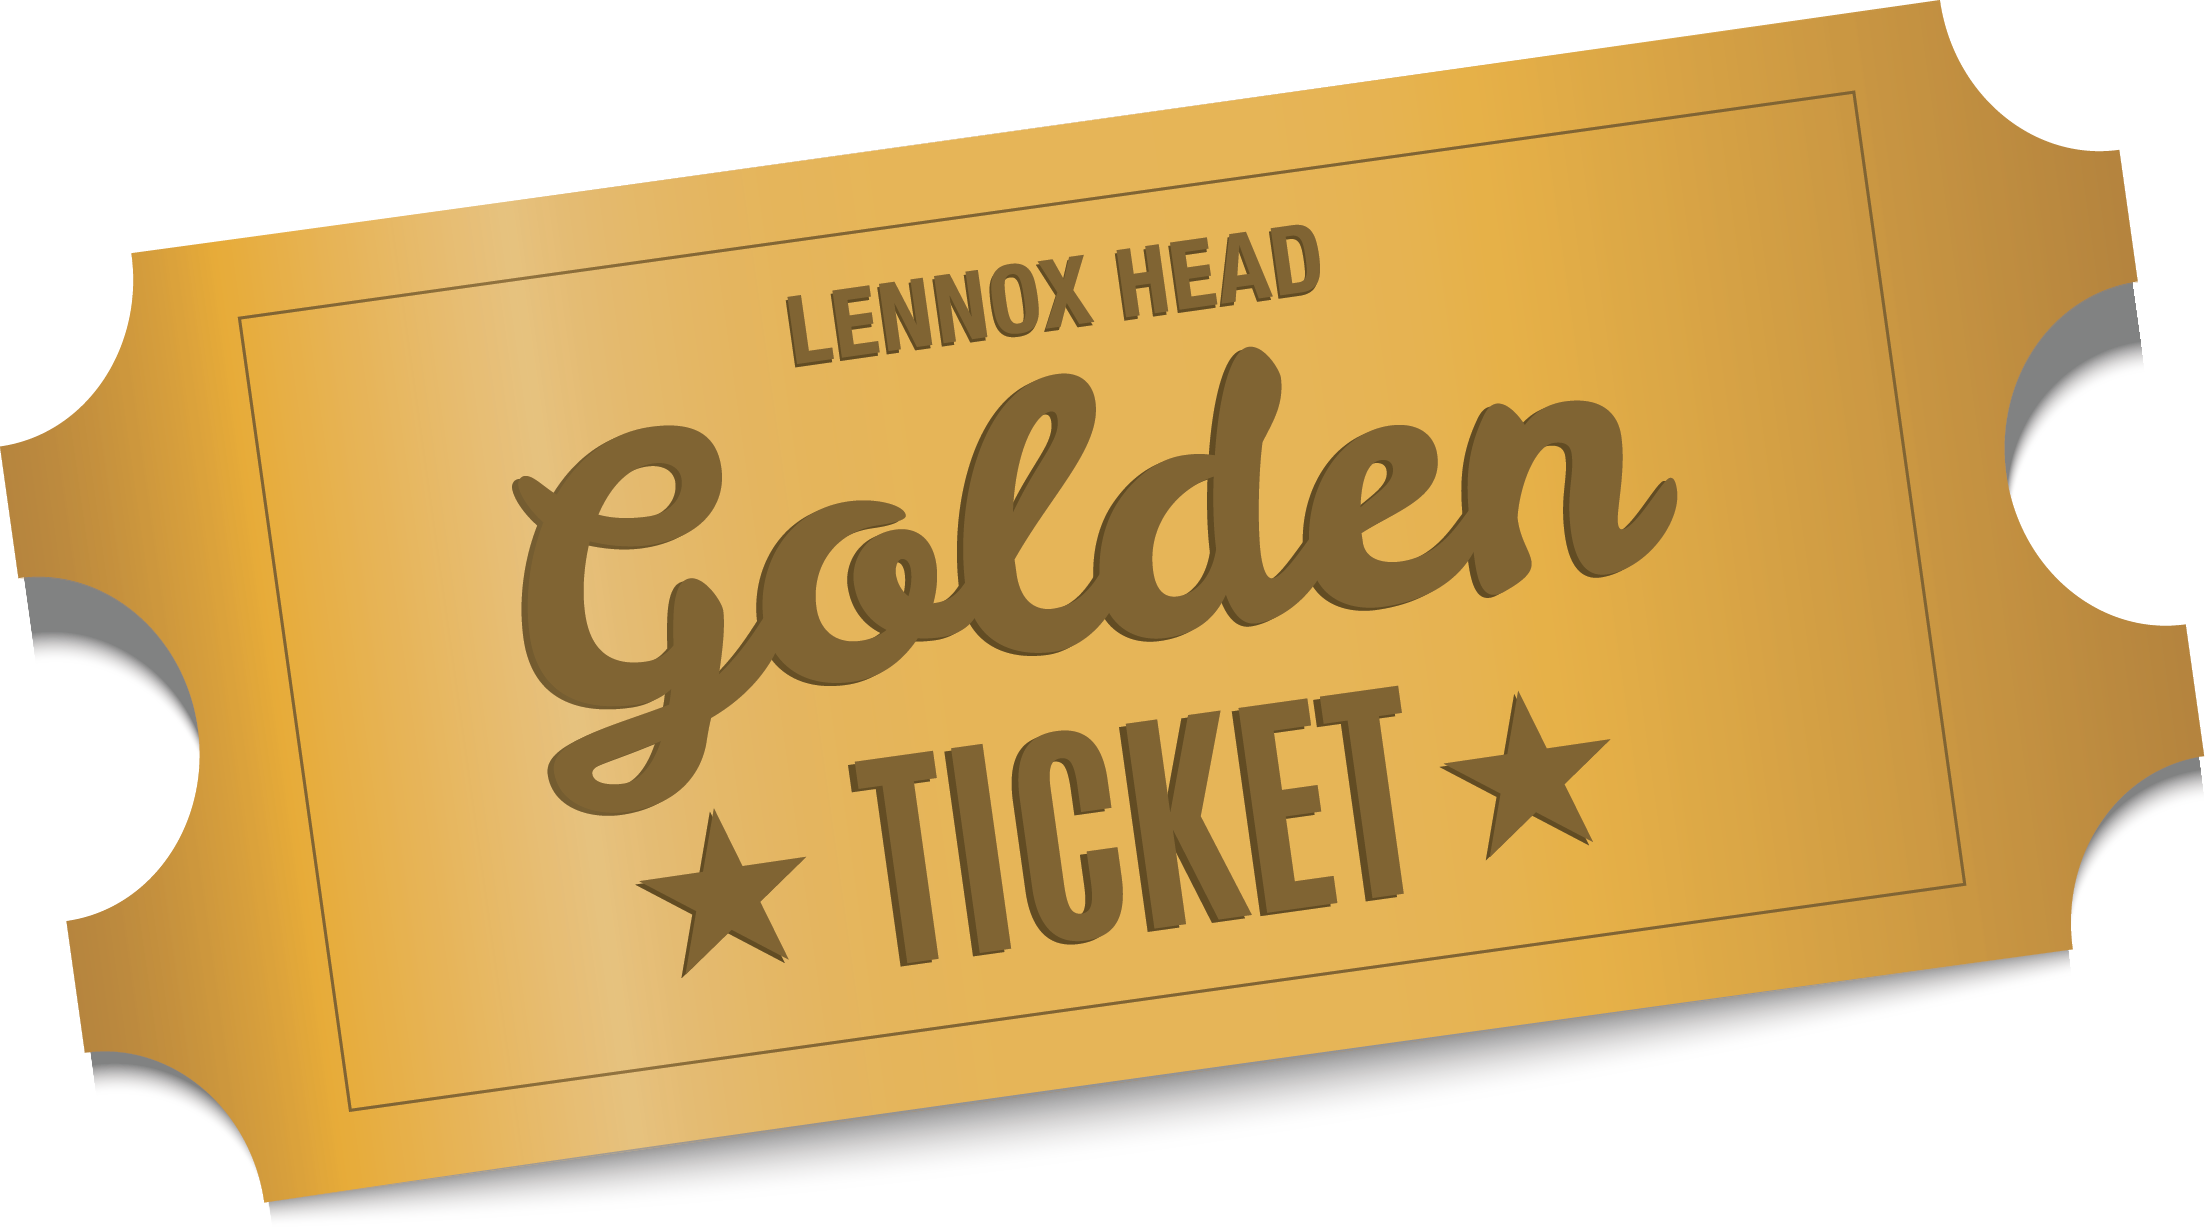 Lennox Head Golden Ticket: Promotional Toolkit